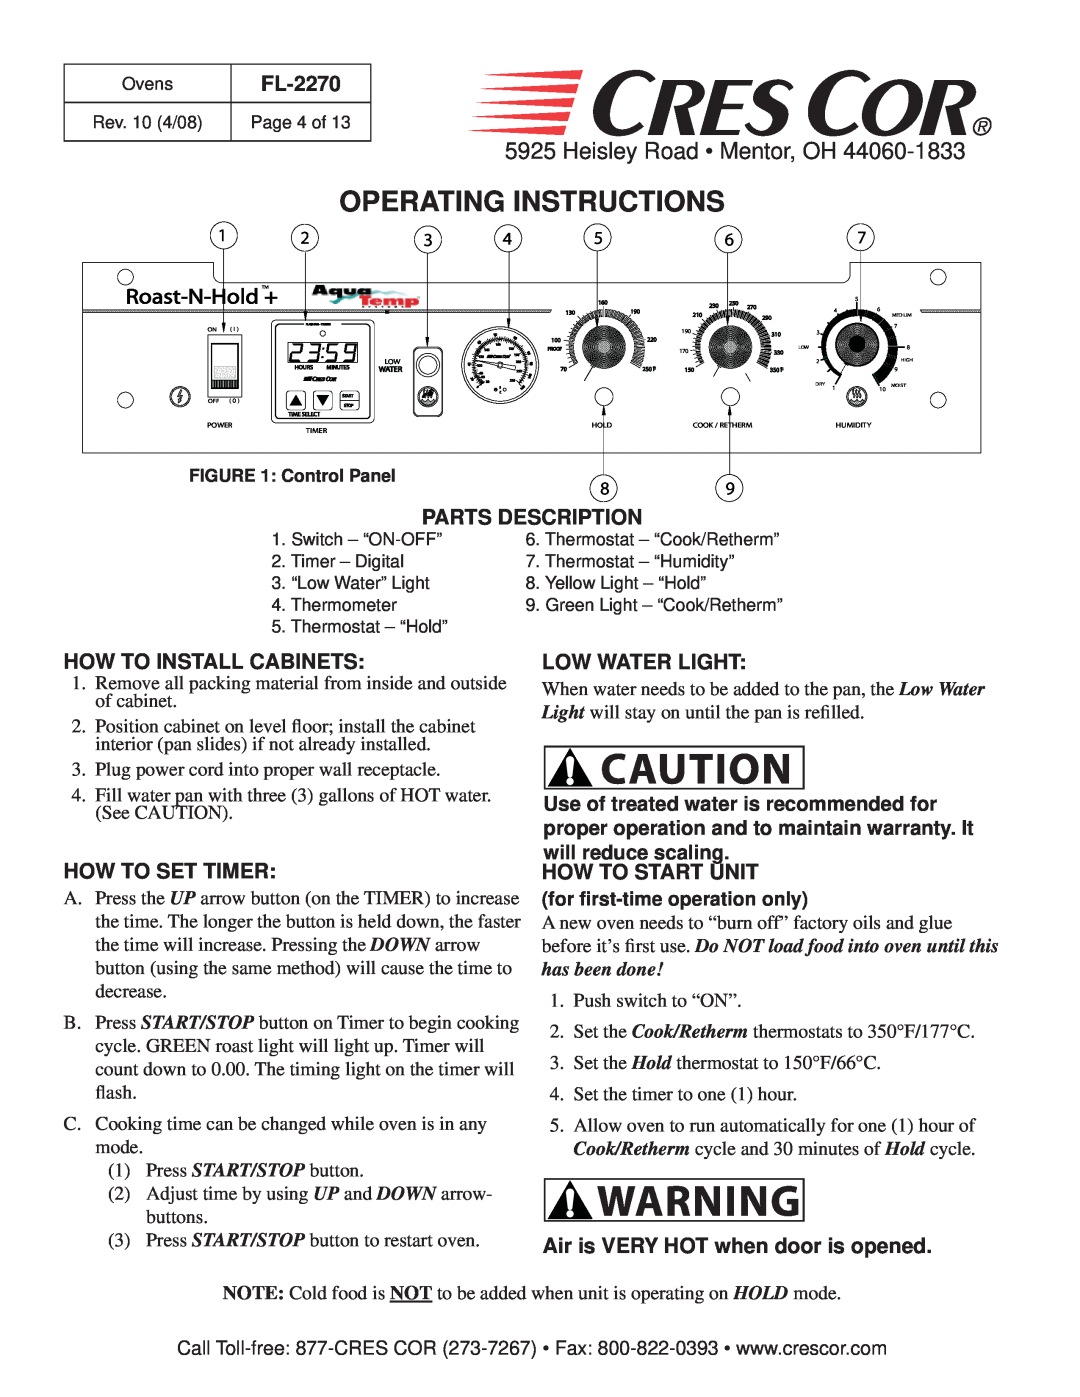 Cres Cor CO151FWUA12B manual Operating Instructions, Heisley Road Mentor, OH, FL-2270, Roast-N-Hold+, Parts Description 